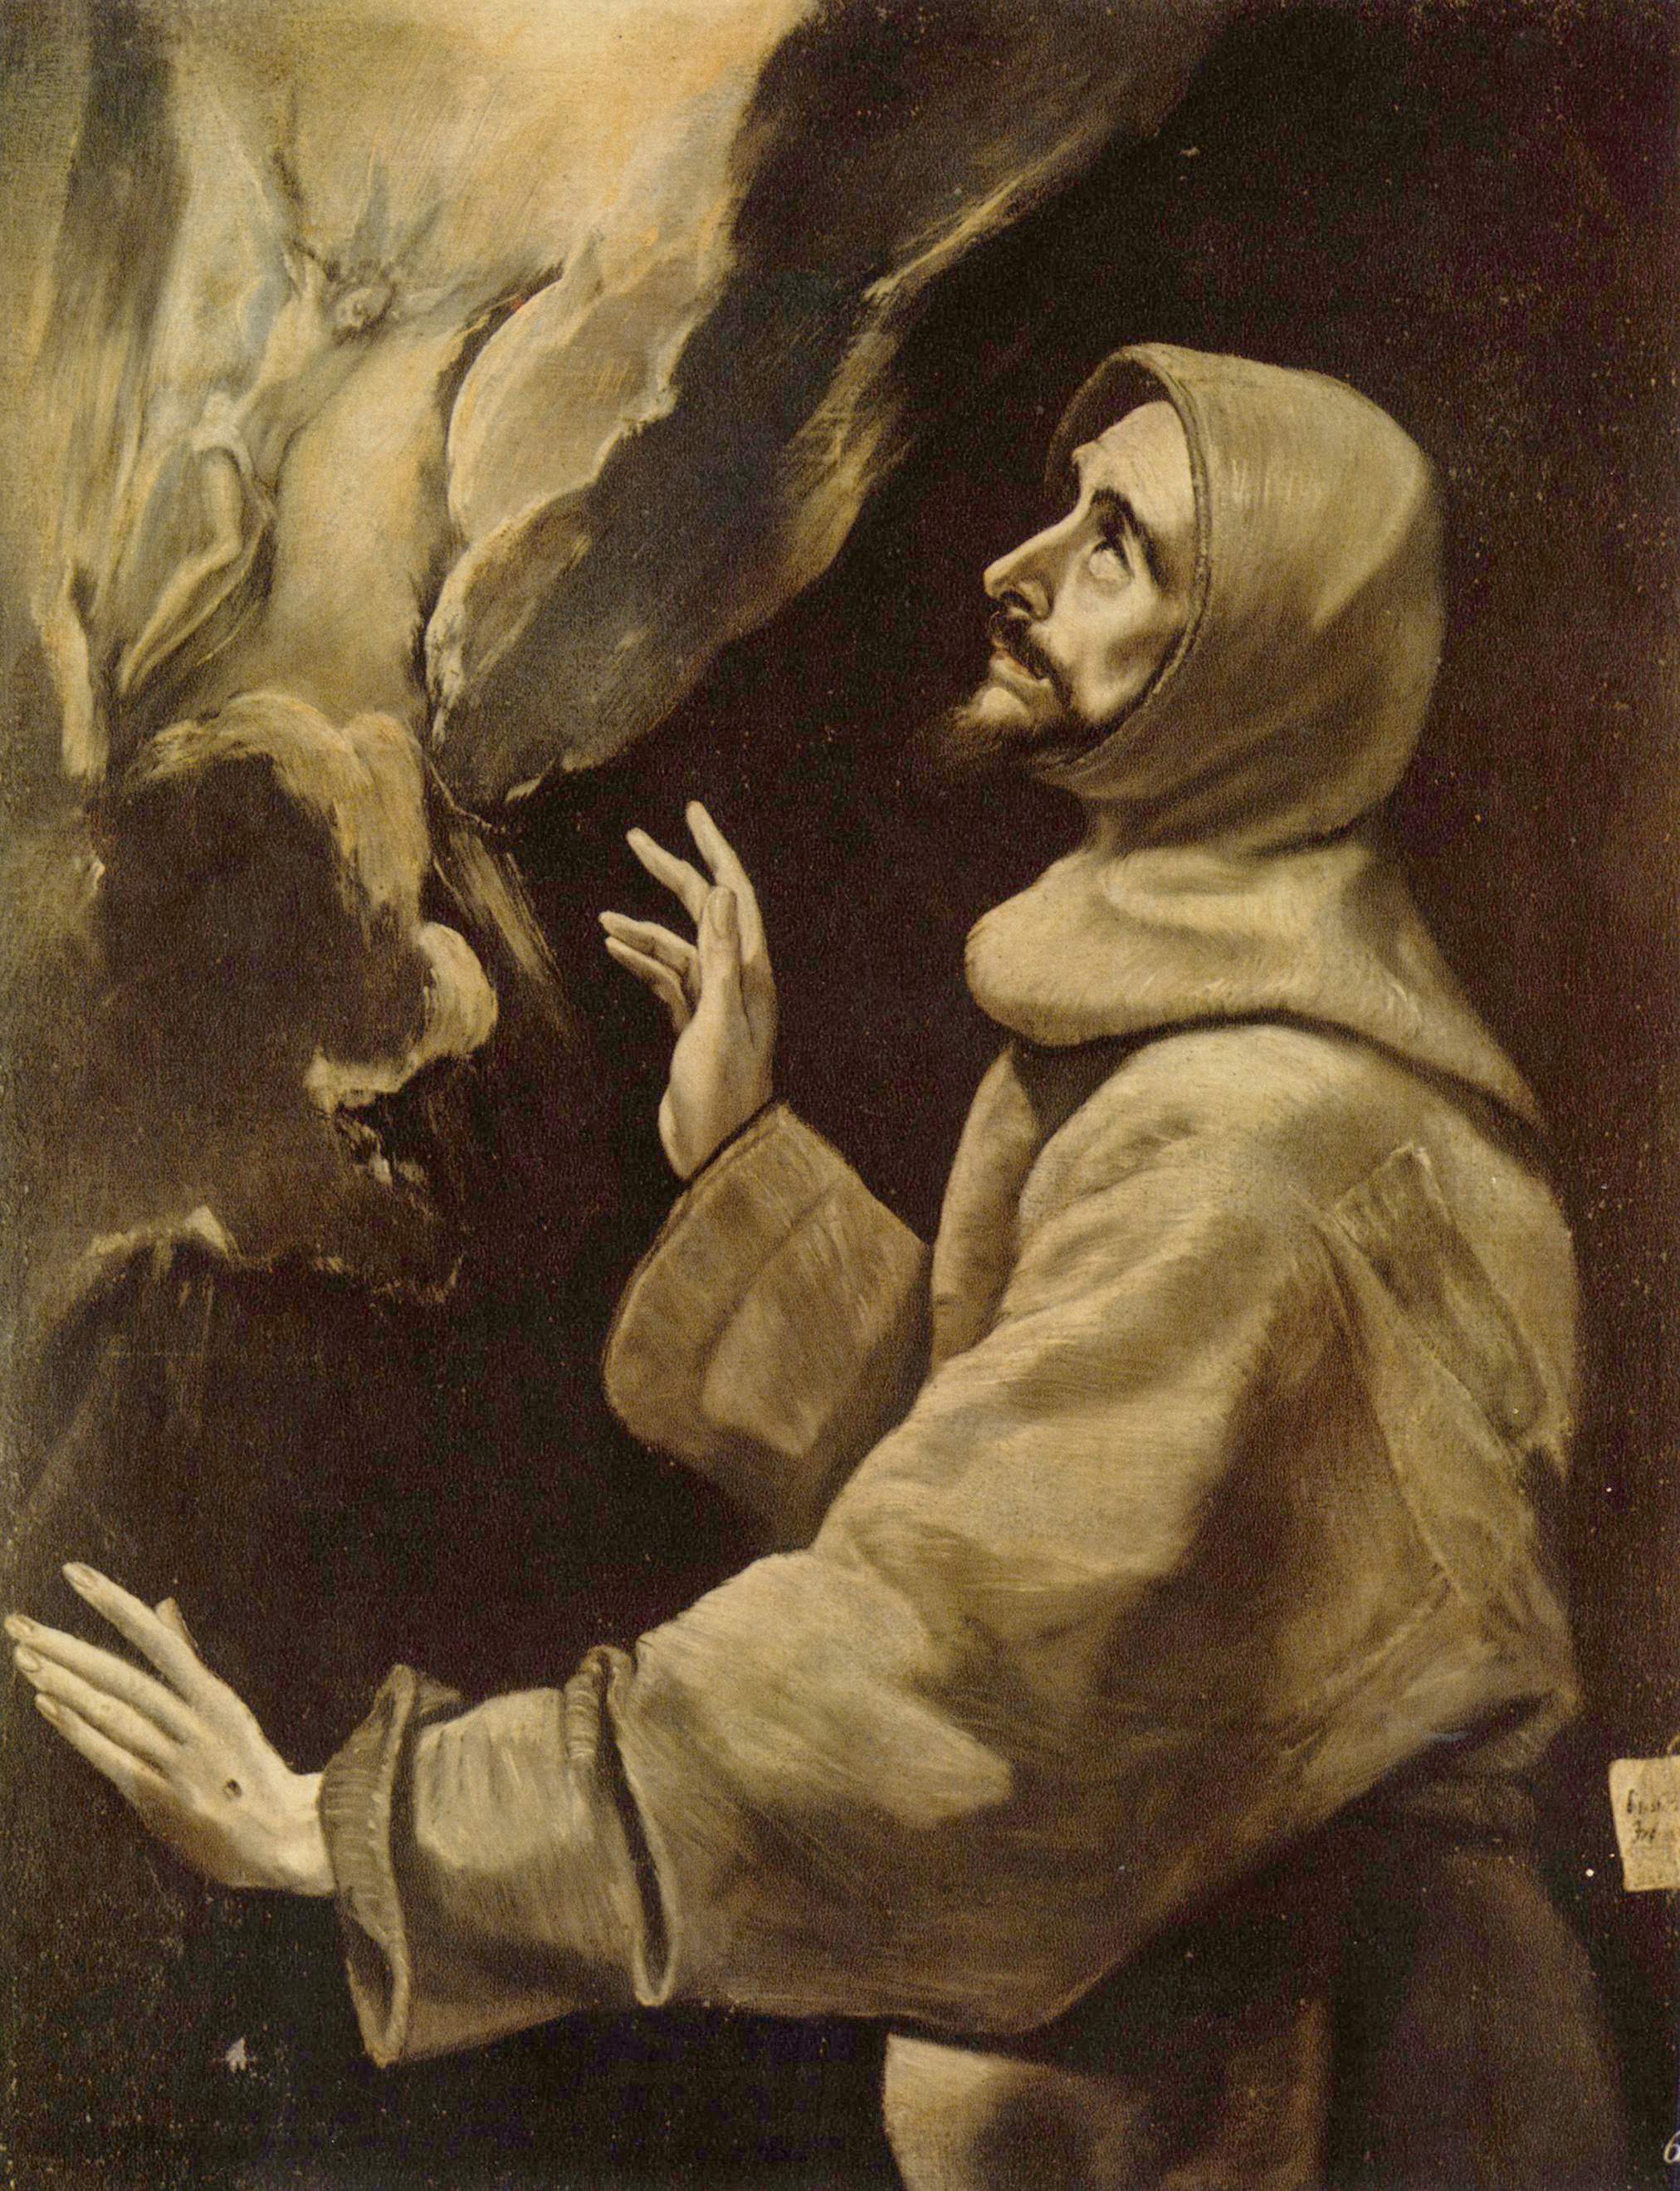 St. Francis receiving the stigmata (1578).